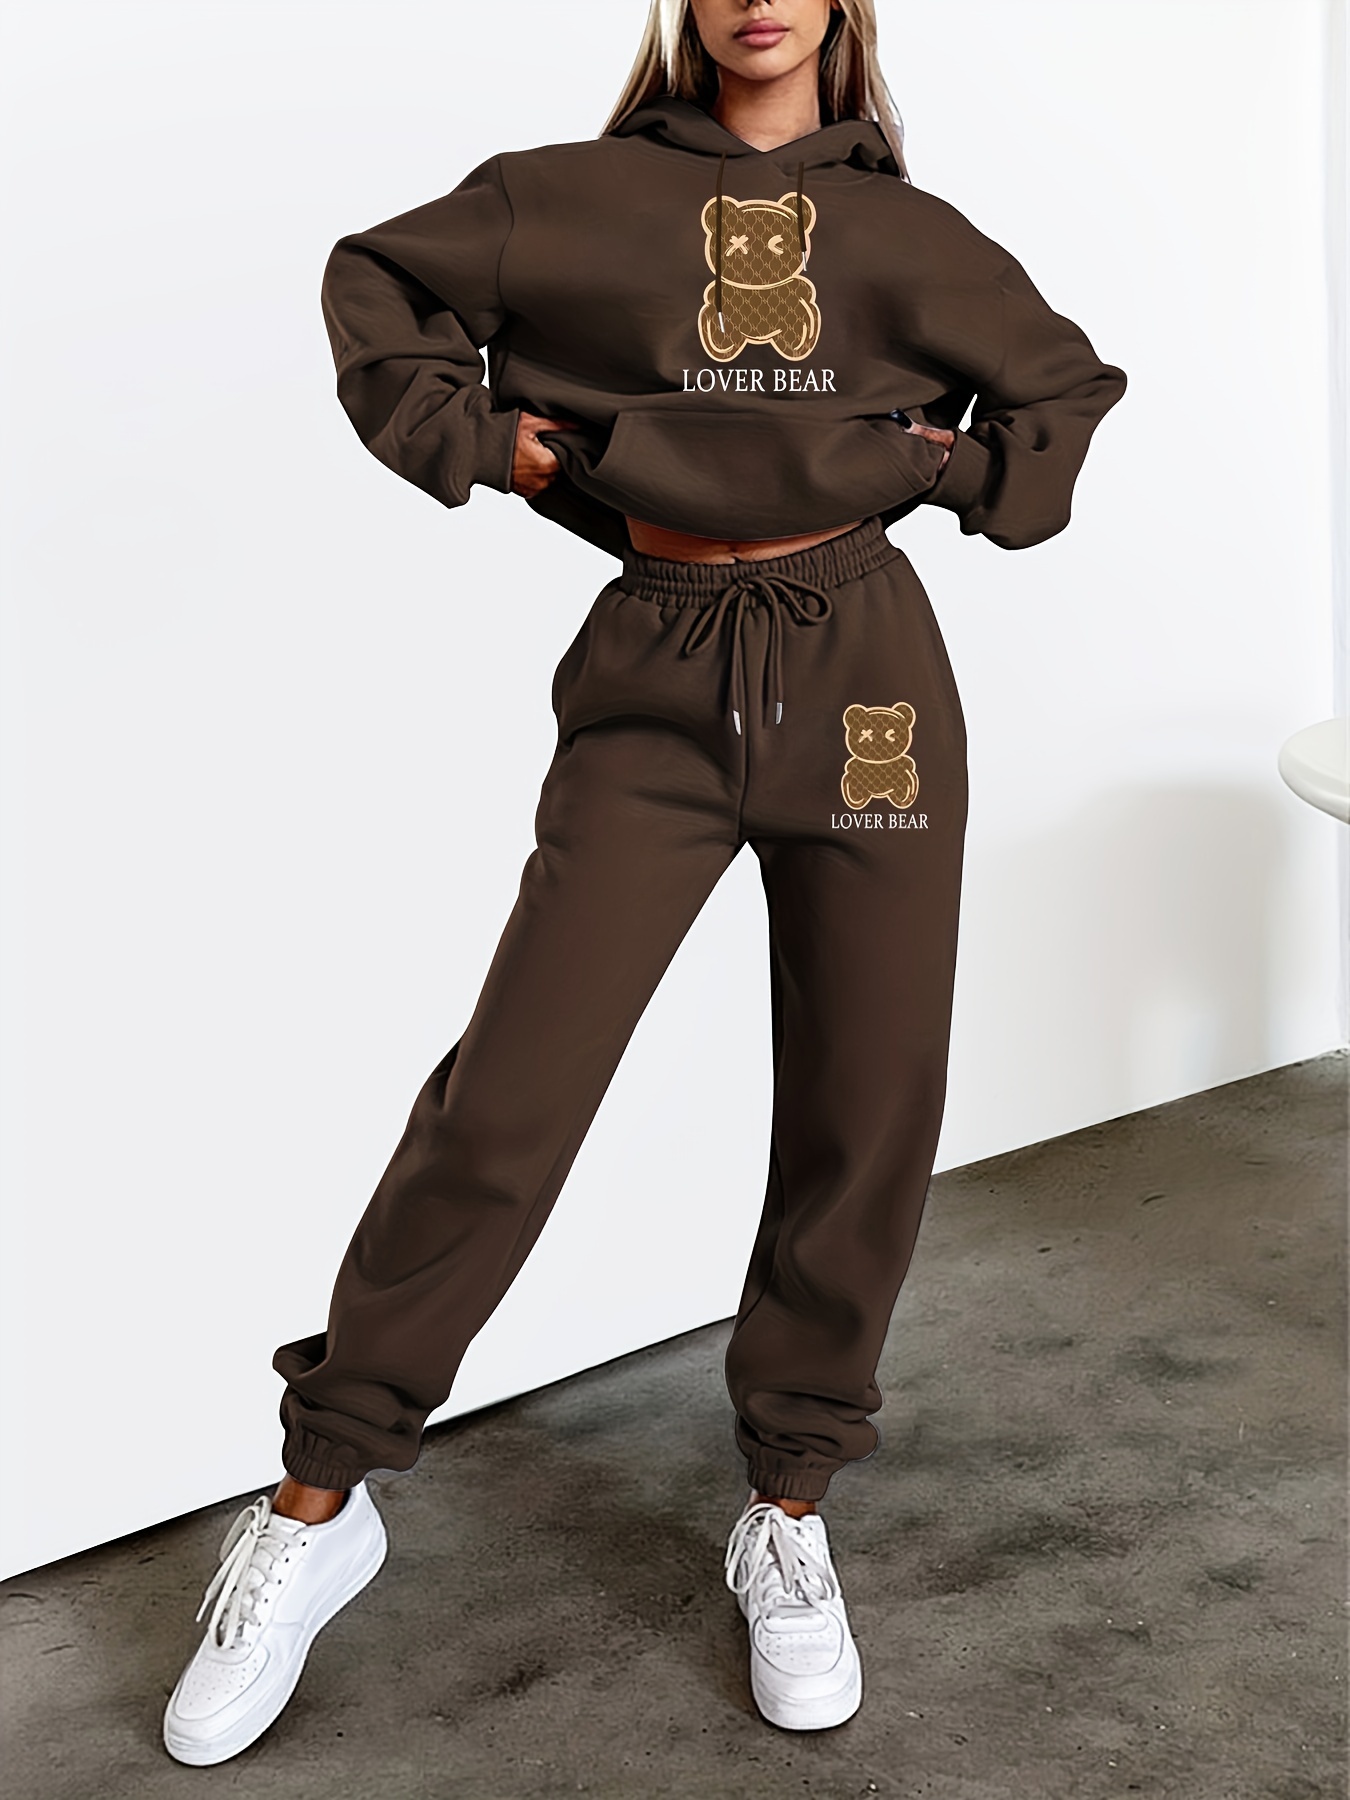 Fashionable jogging suits for women's - Tracksuit set – Salma's Apparel co